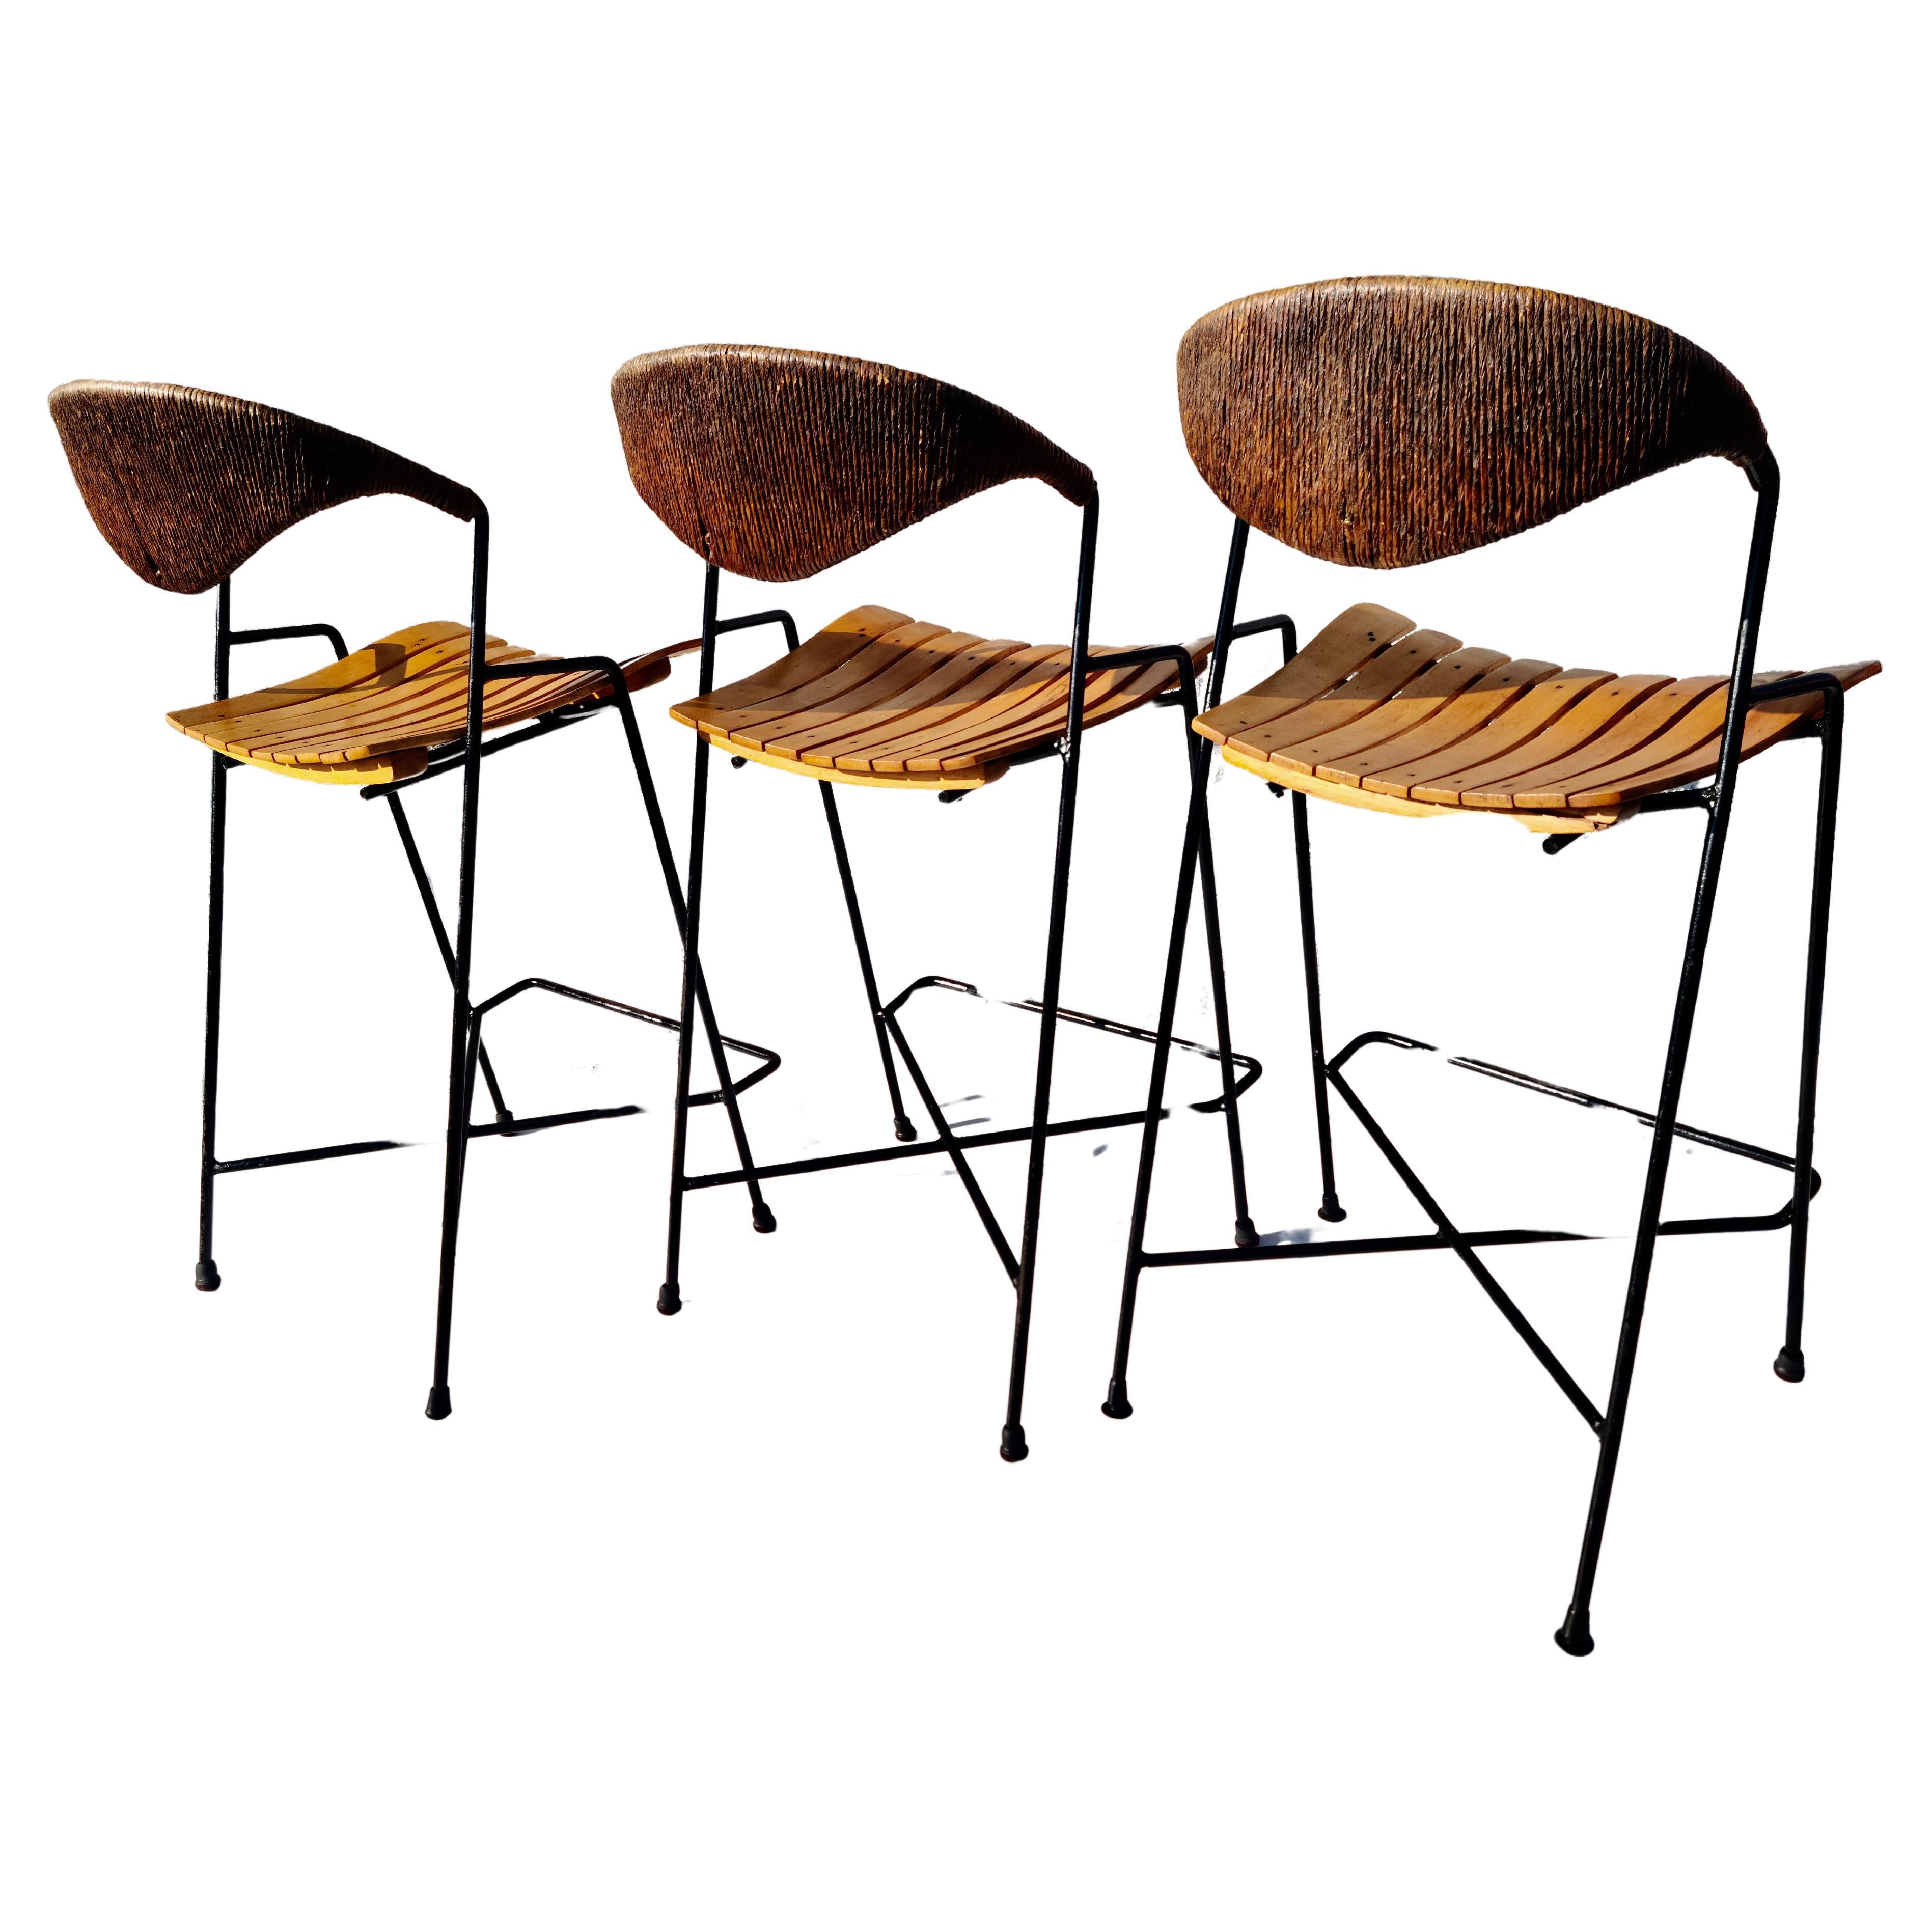 Mid-20th Century Set of 3 Barstools by Arthur Umanoff for Raymor